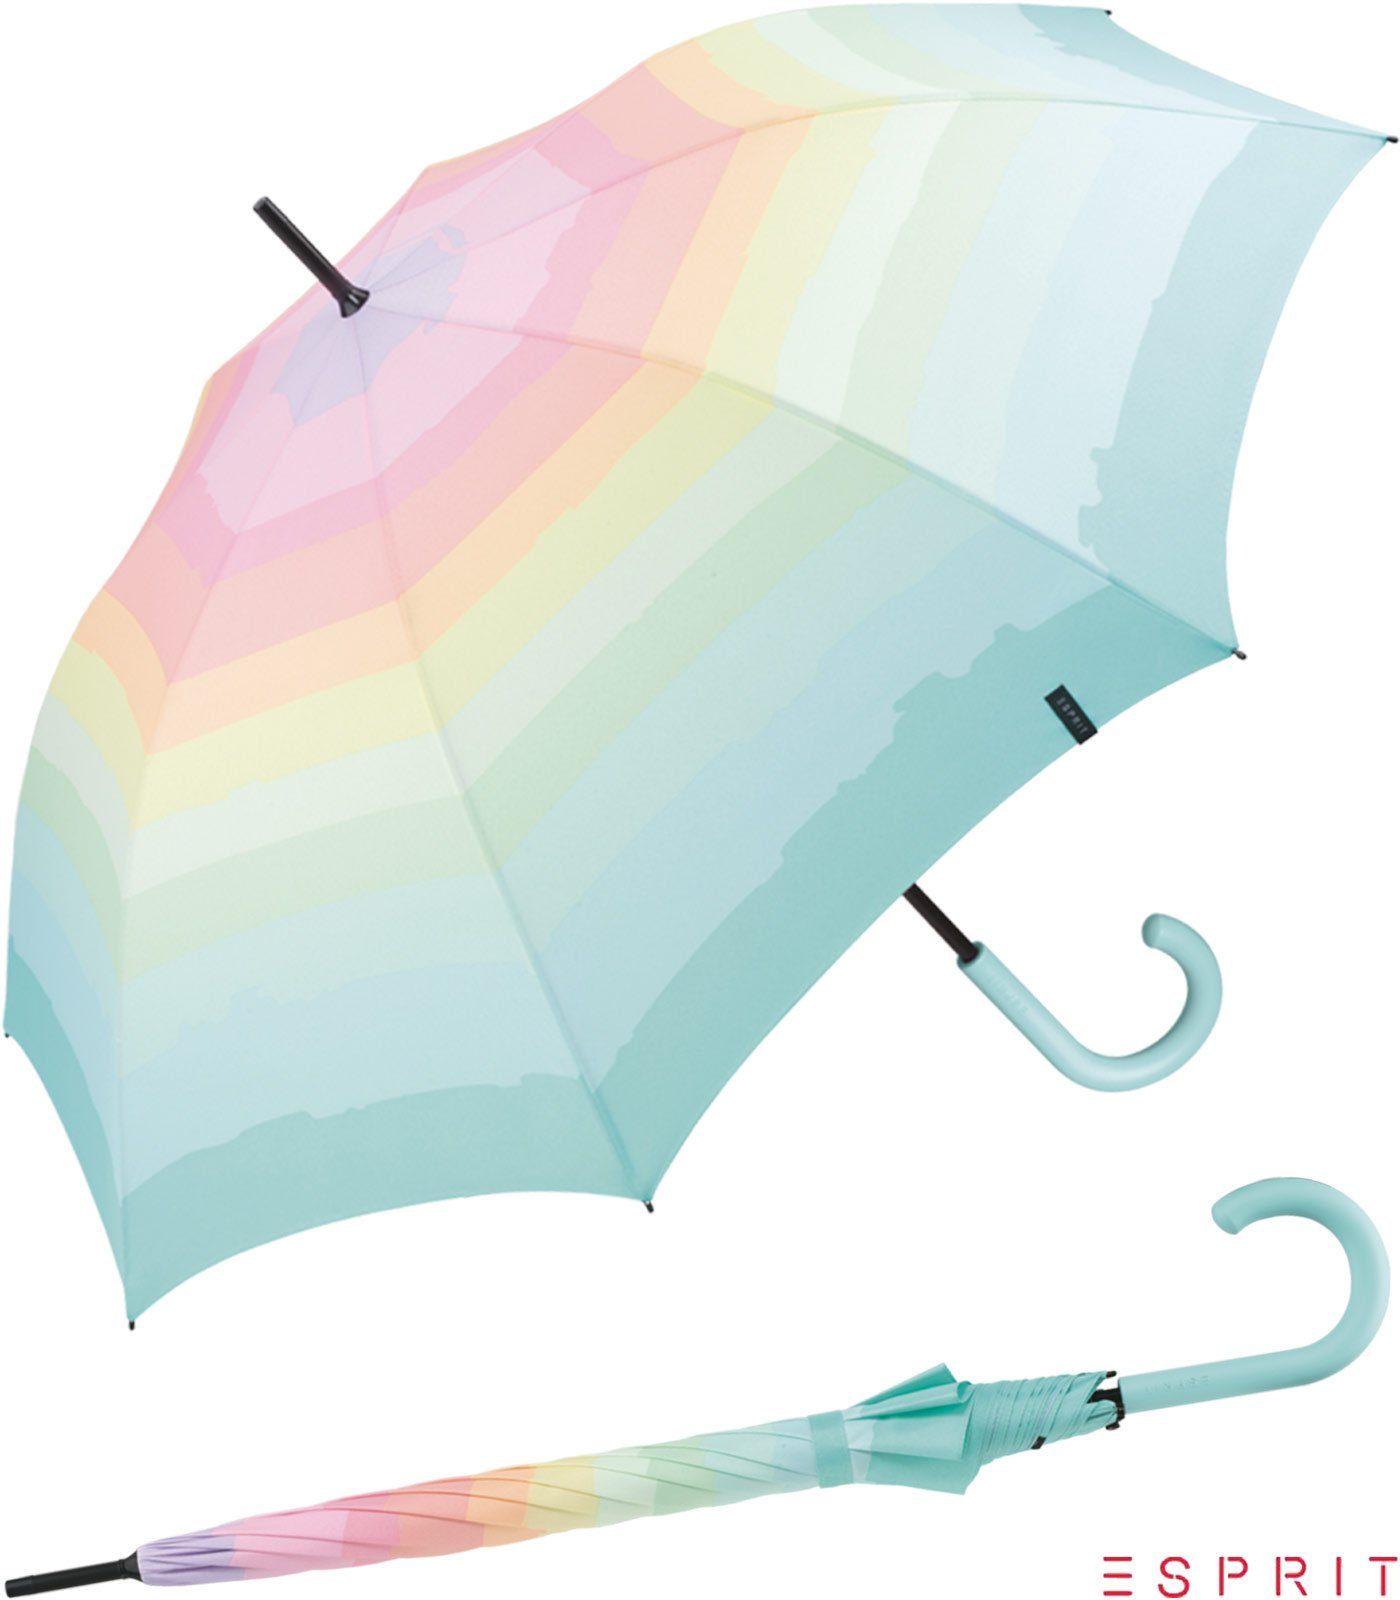 Esprit Stockregenschirm Damen-Regenschirm mit Automatik Rainbow Dawn, groß und stabil, in Aquarell-Regenbogen Optik türkis